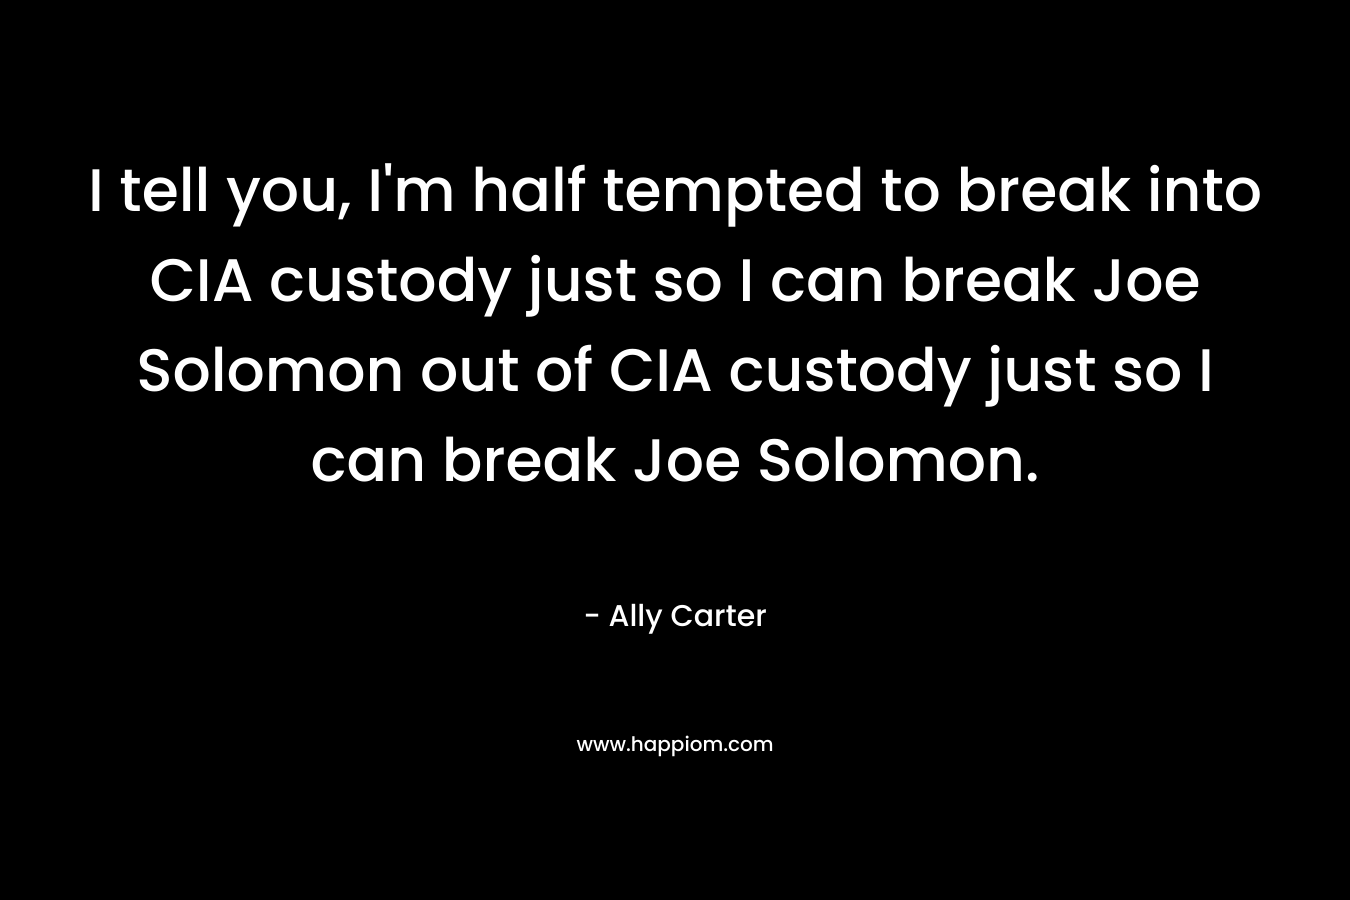 I tell you, I'm half tempted to break into CIA custody just so I can break Joe Solomon out of CIA custody just so I can break Joe Solomon.